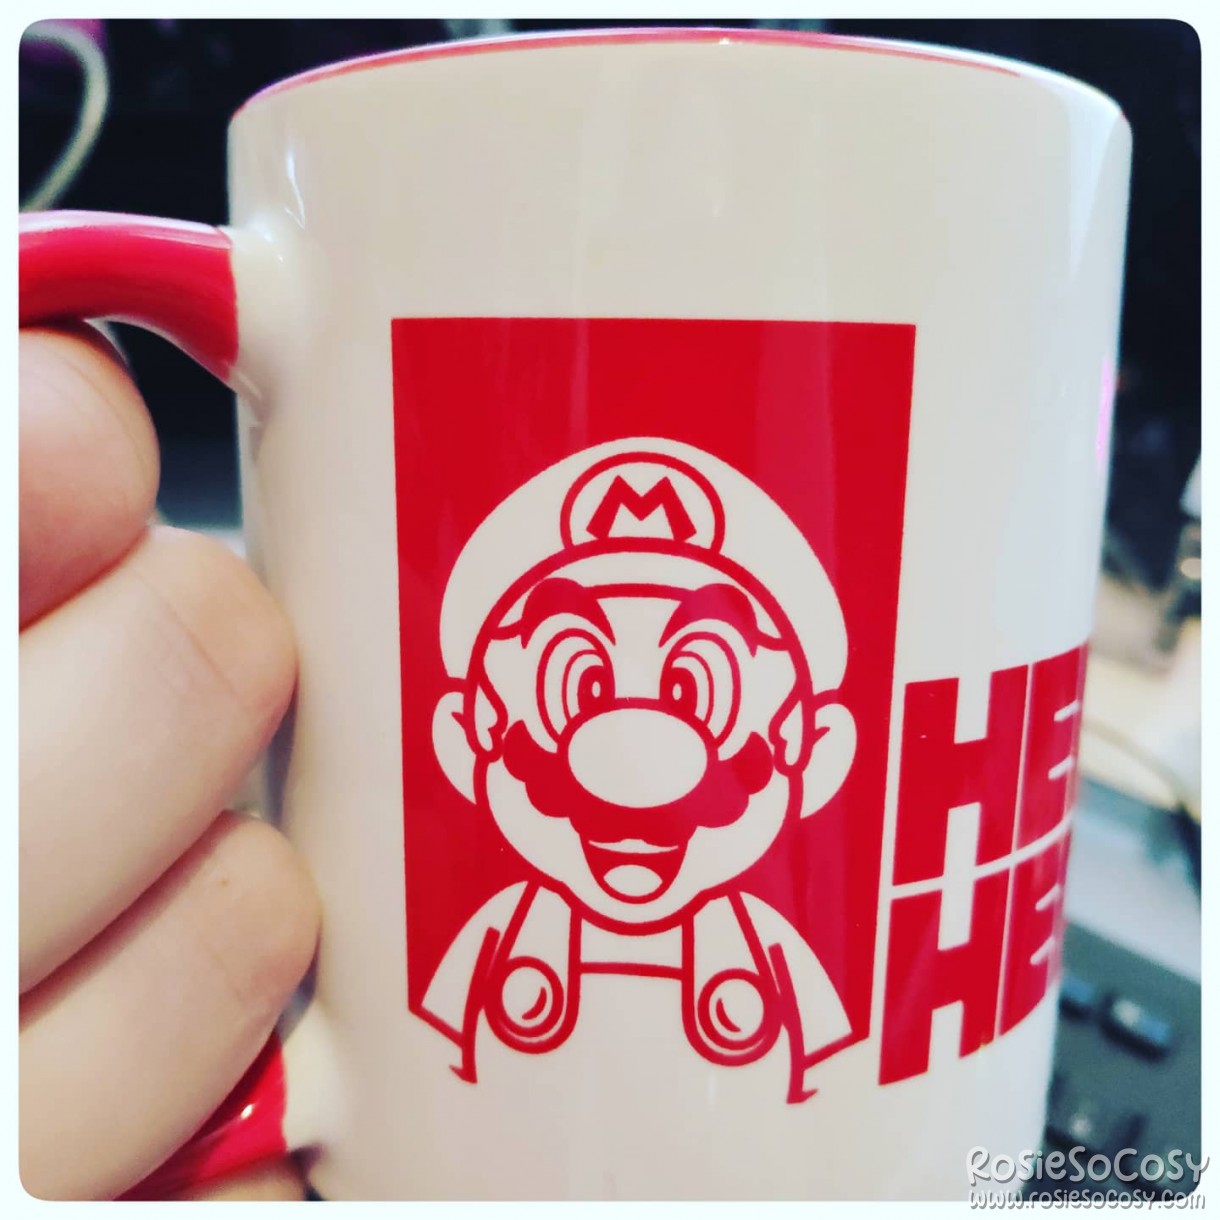 Her Hero - Mario mug mok